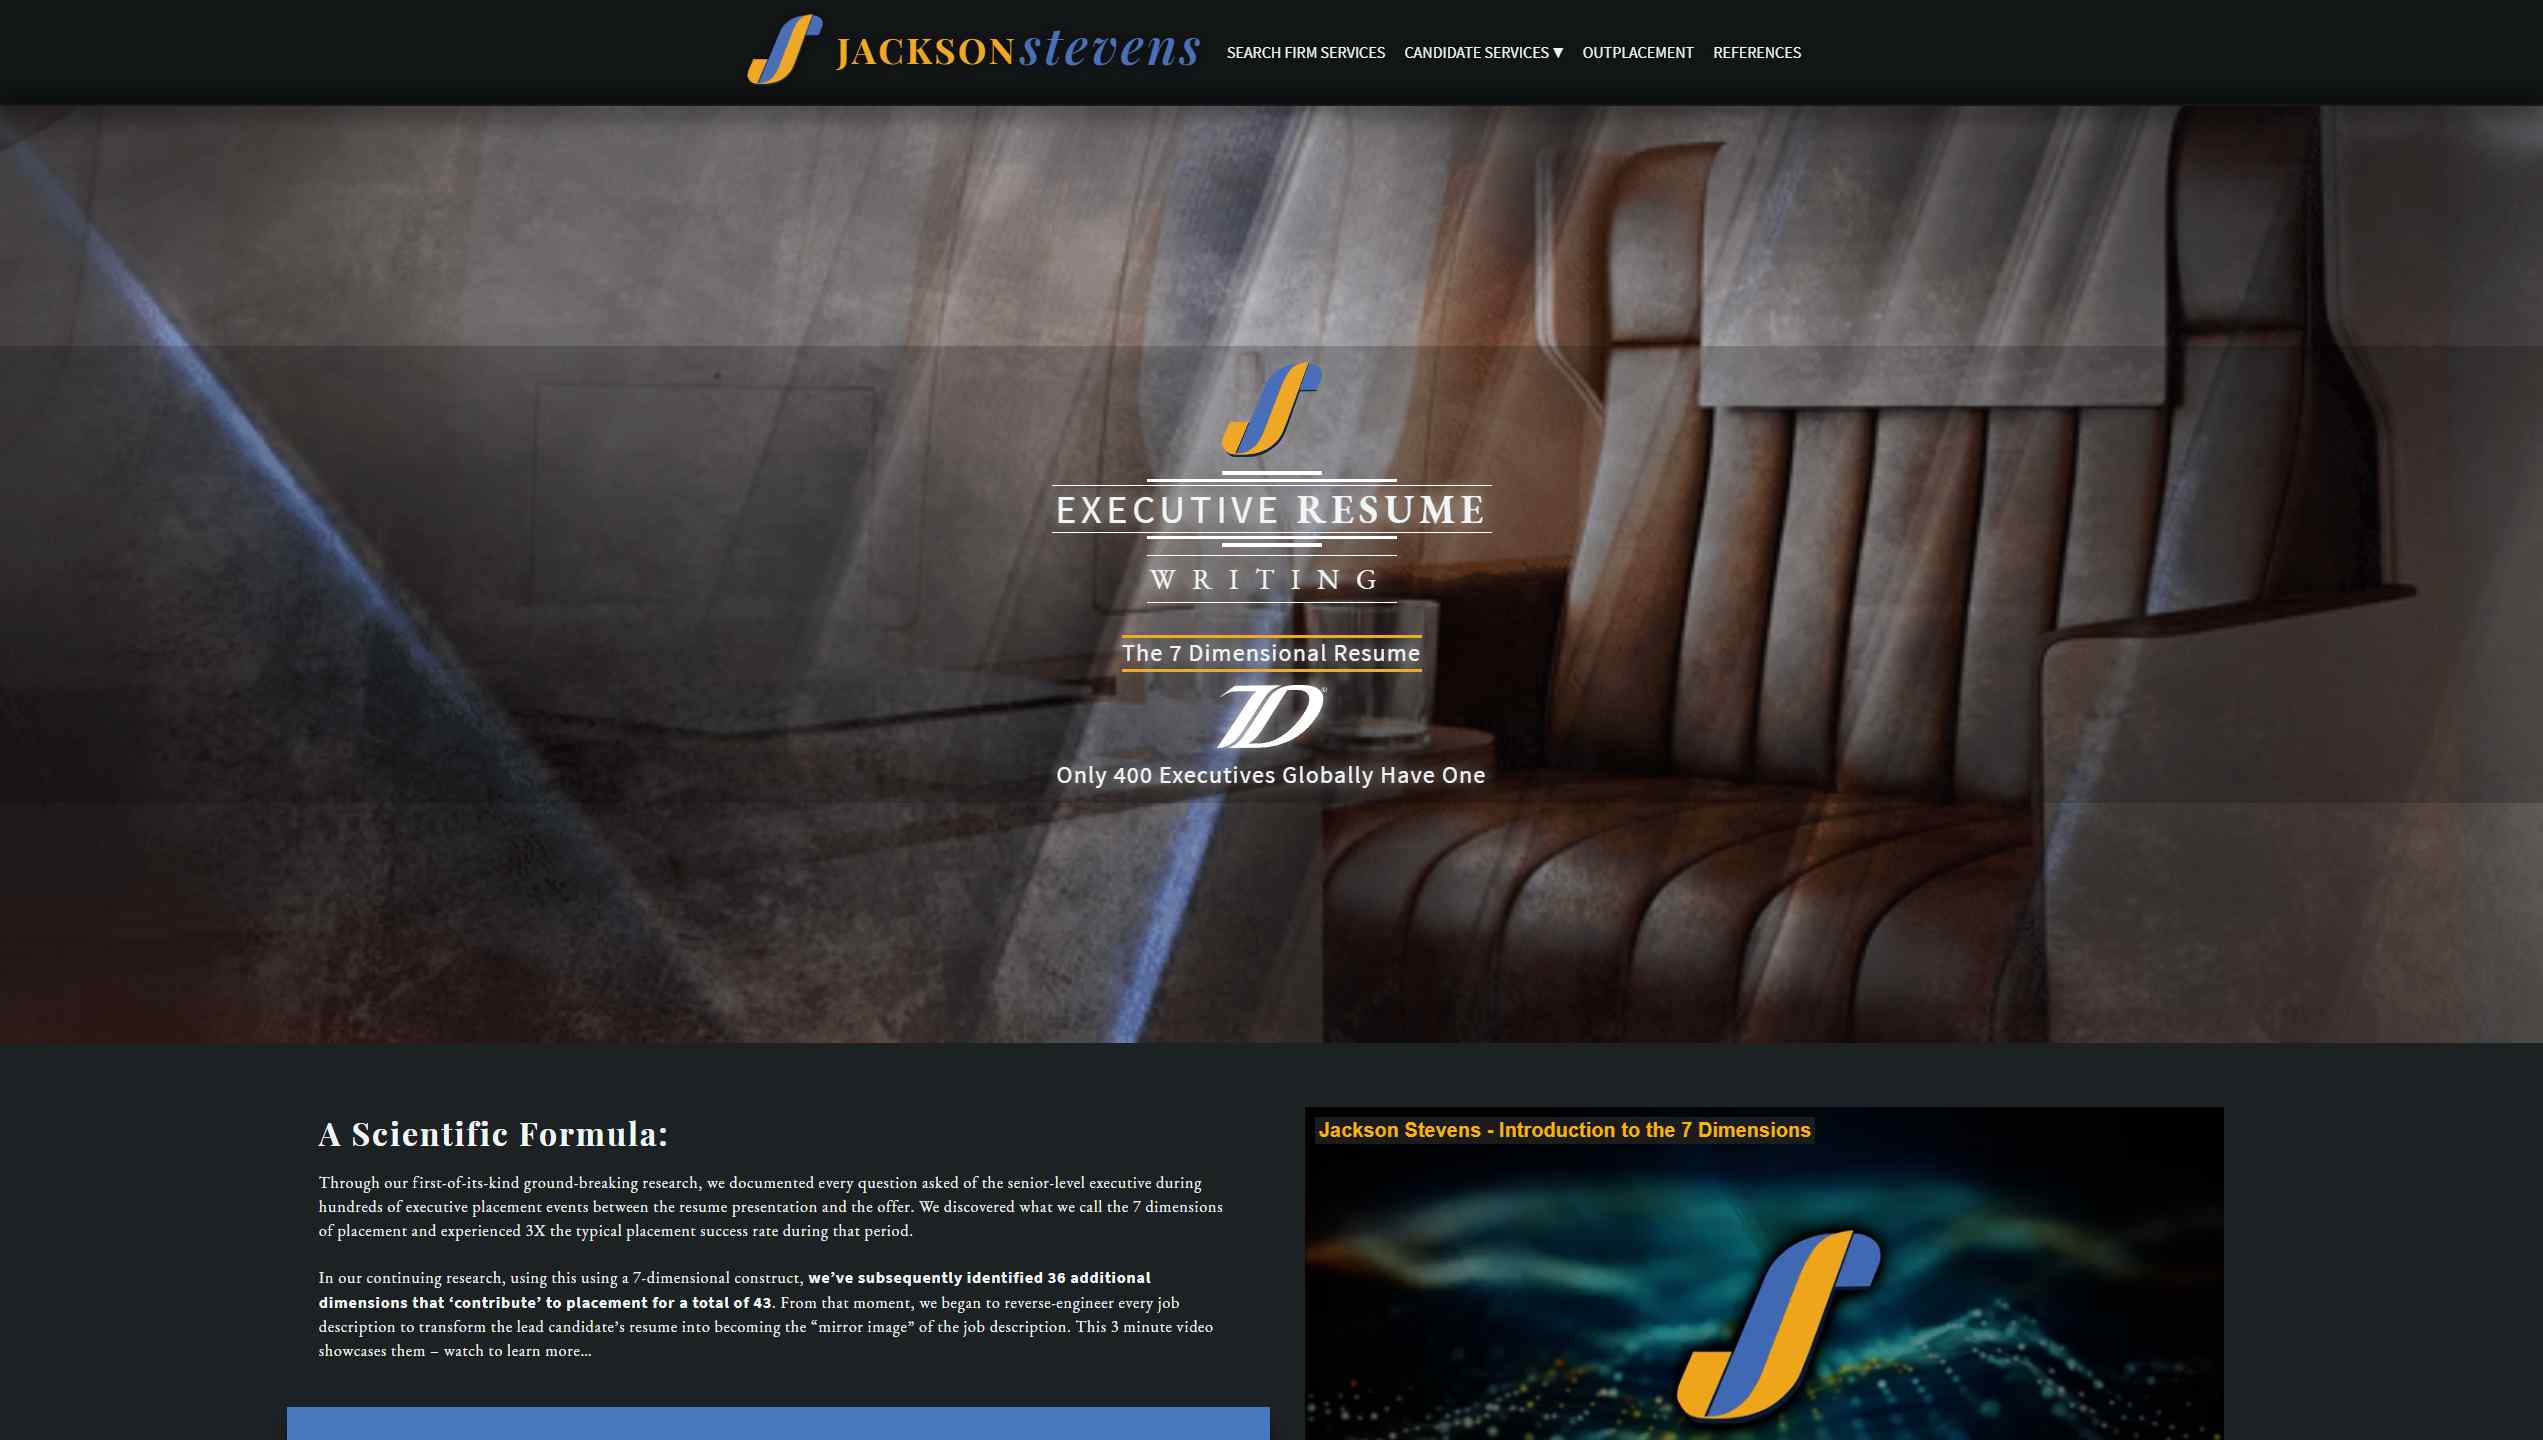 Jackson Stevens Resumes – Desktop device screenshot of the executive resume writing webpage